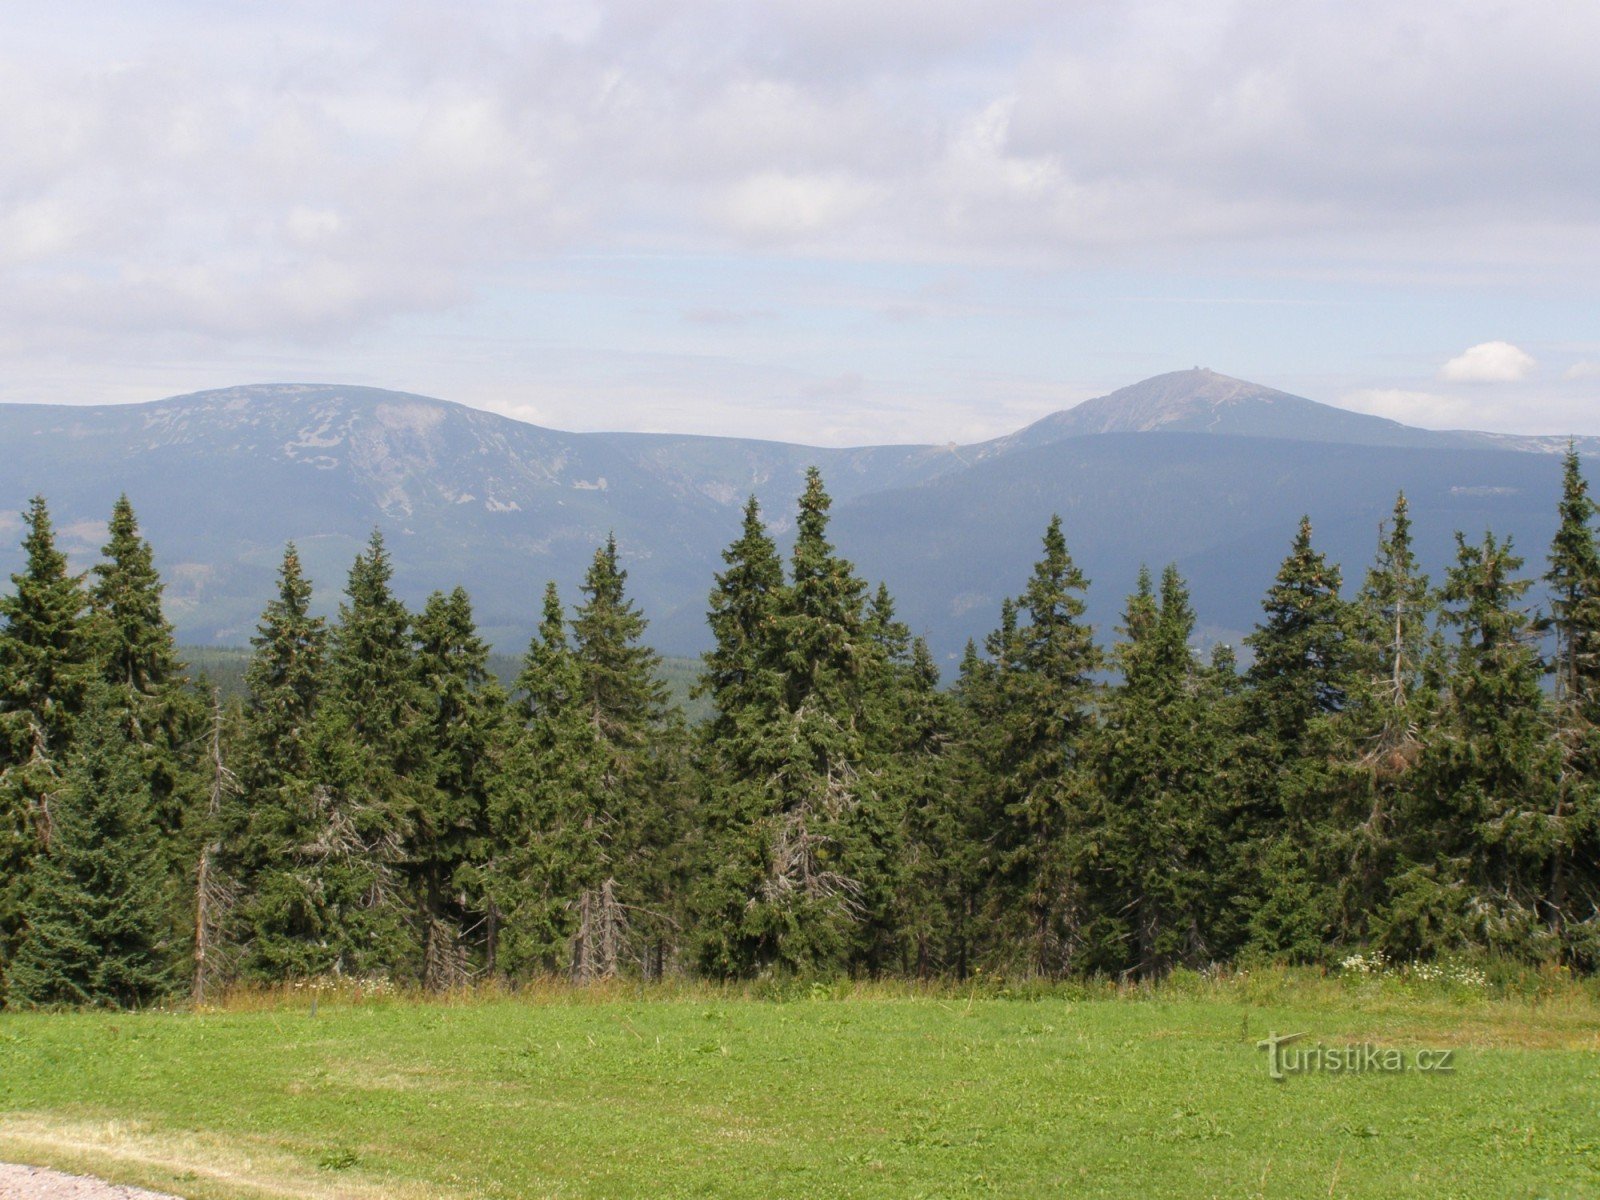 Çerná hora - 从 Çerná Bouda 到 Studniční hora、Obrí důl 和 Sněžka 的景色